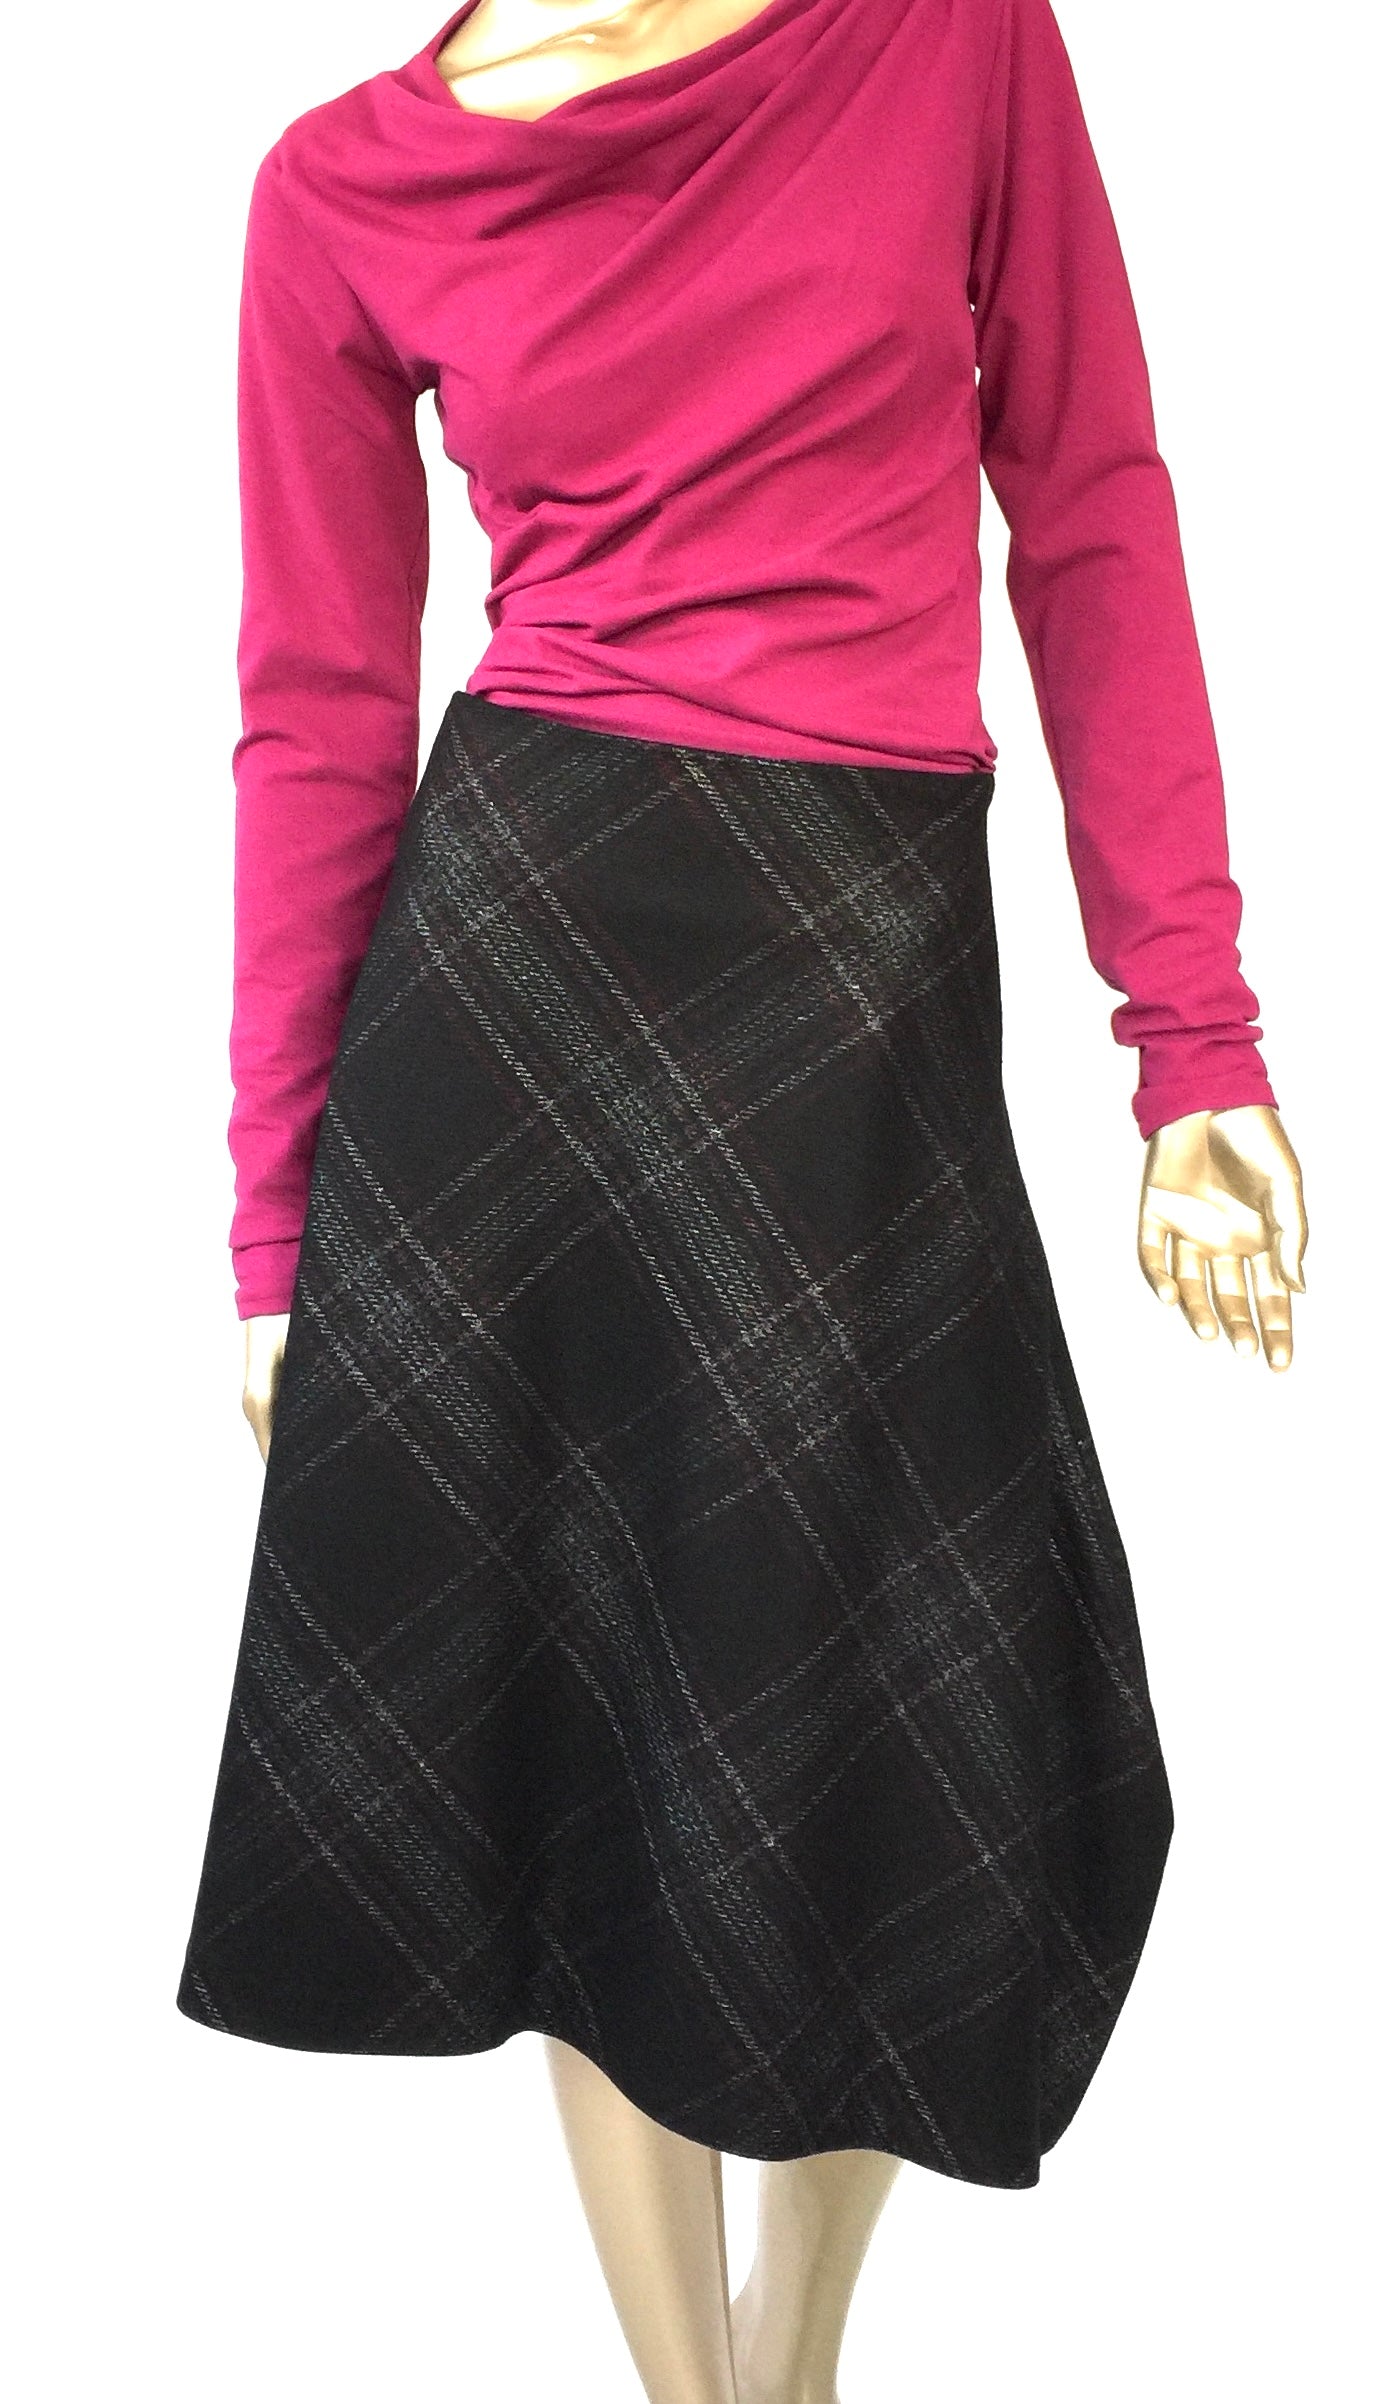 Wool check skirt .Style Atina,Winter skirt, Work skirt, office wear skirt